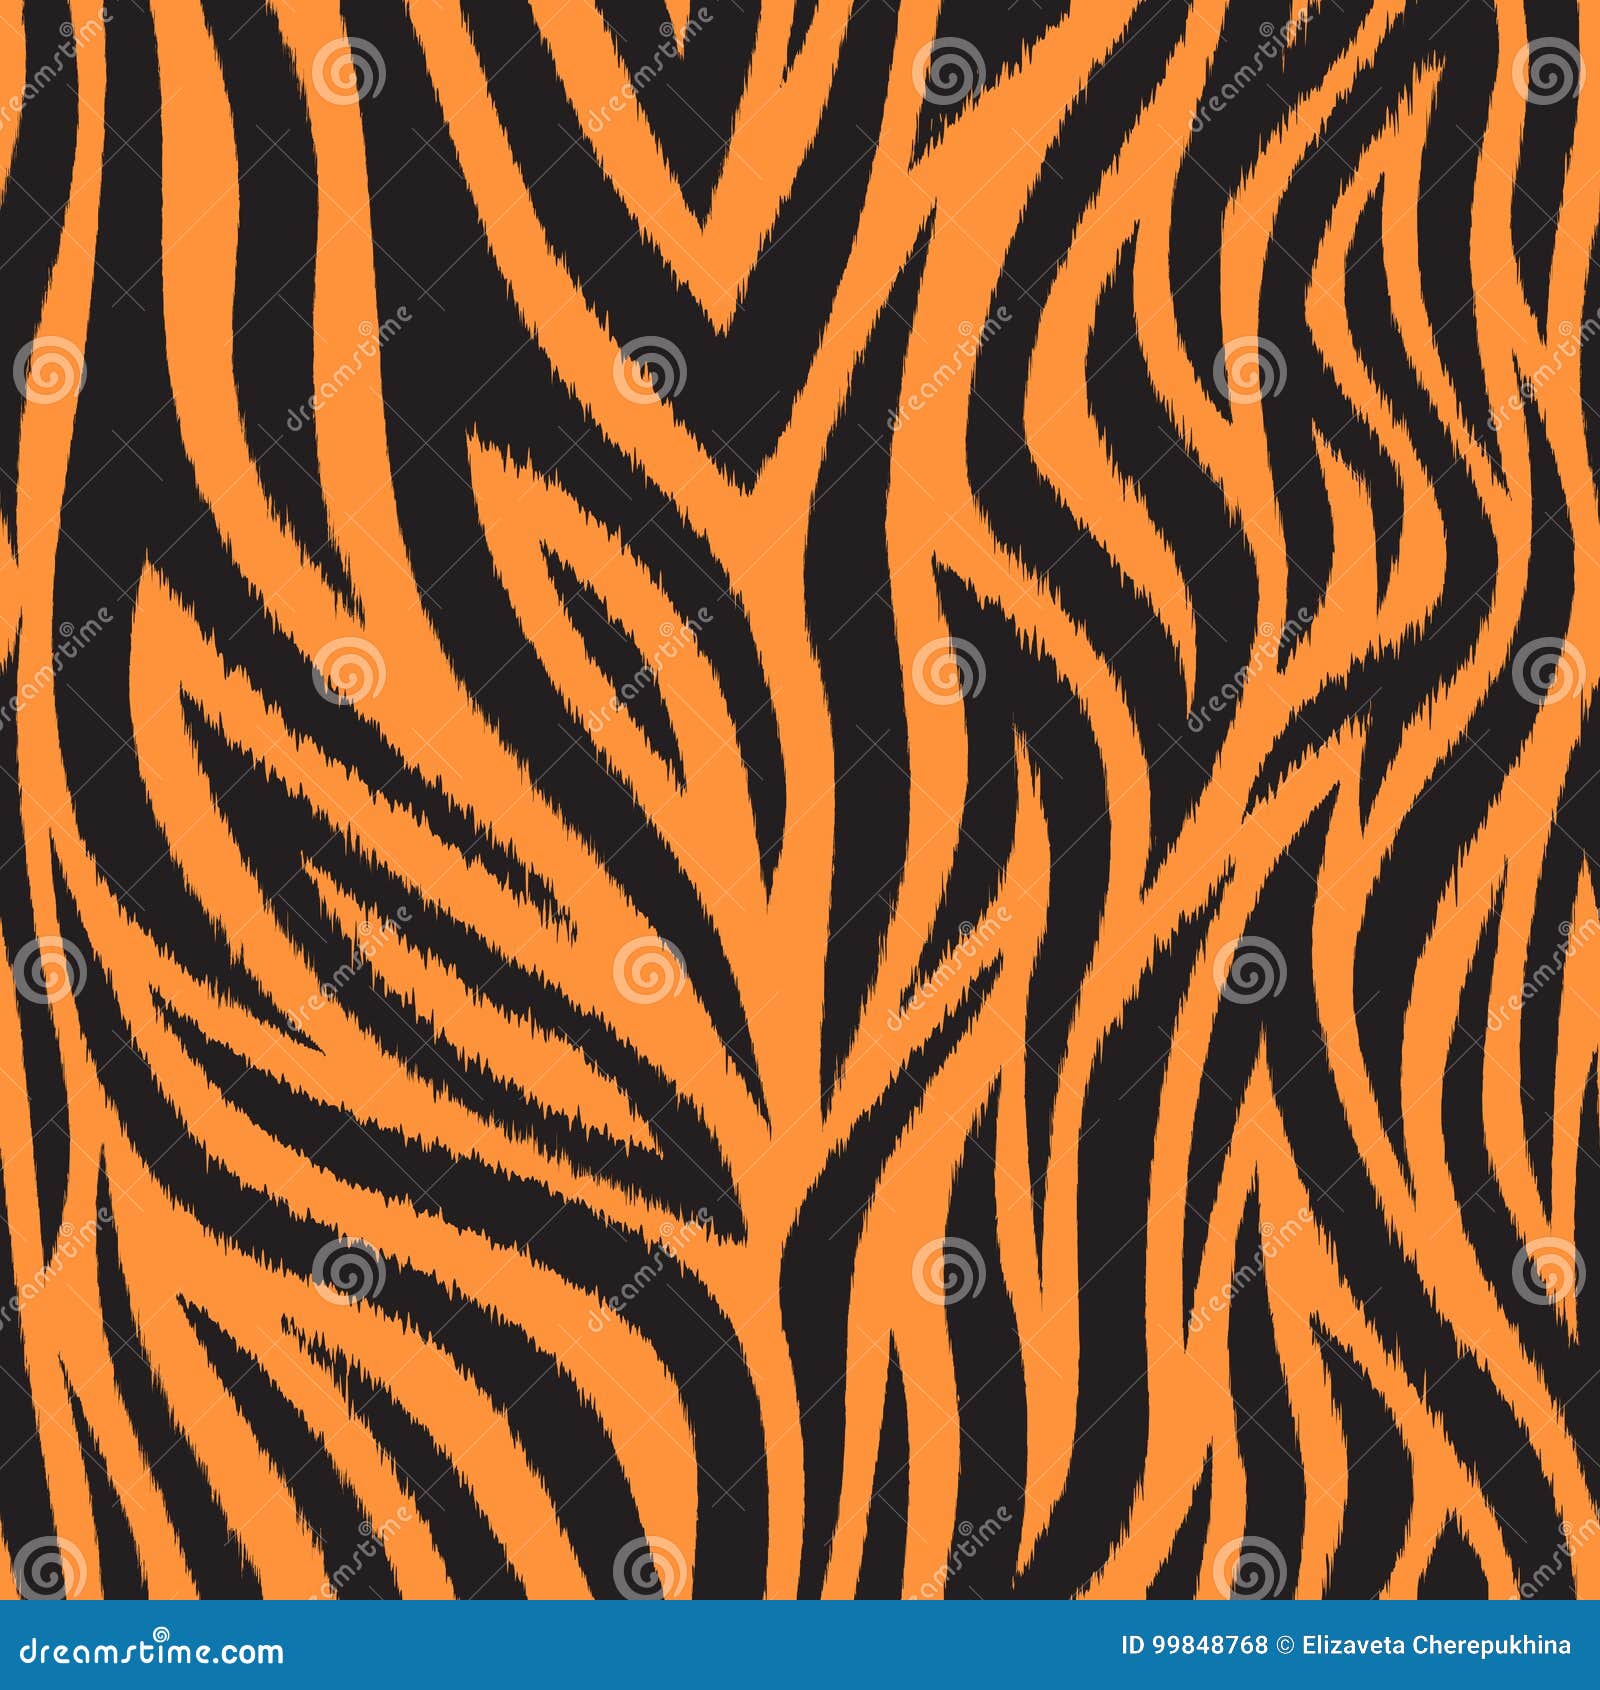 seamless pattern with tiger skin. black and orange tiger stripes. popular texture.